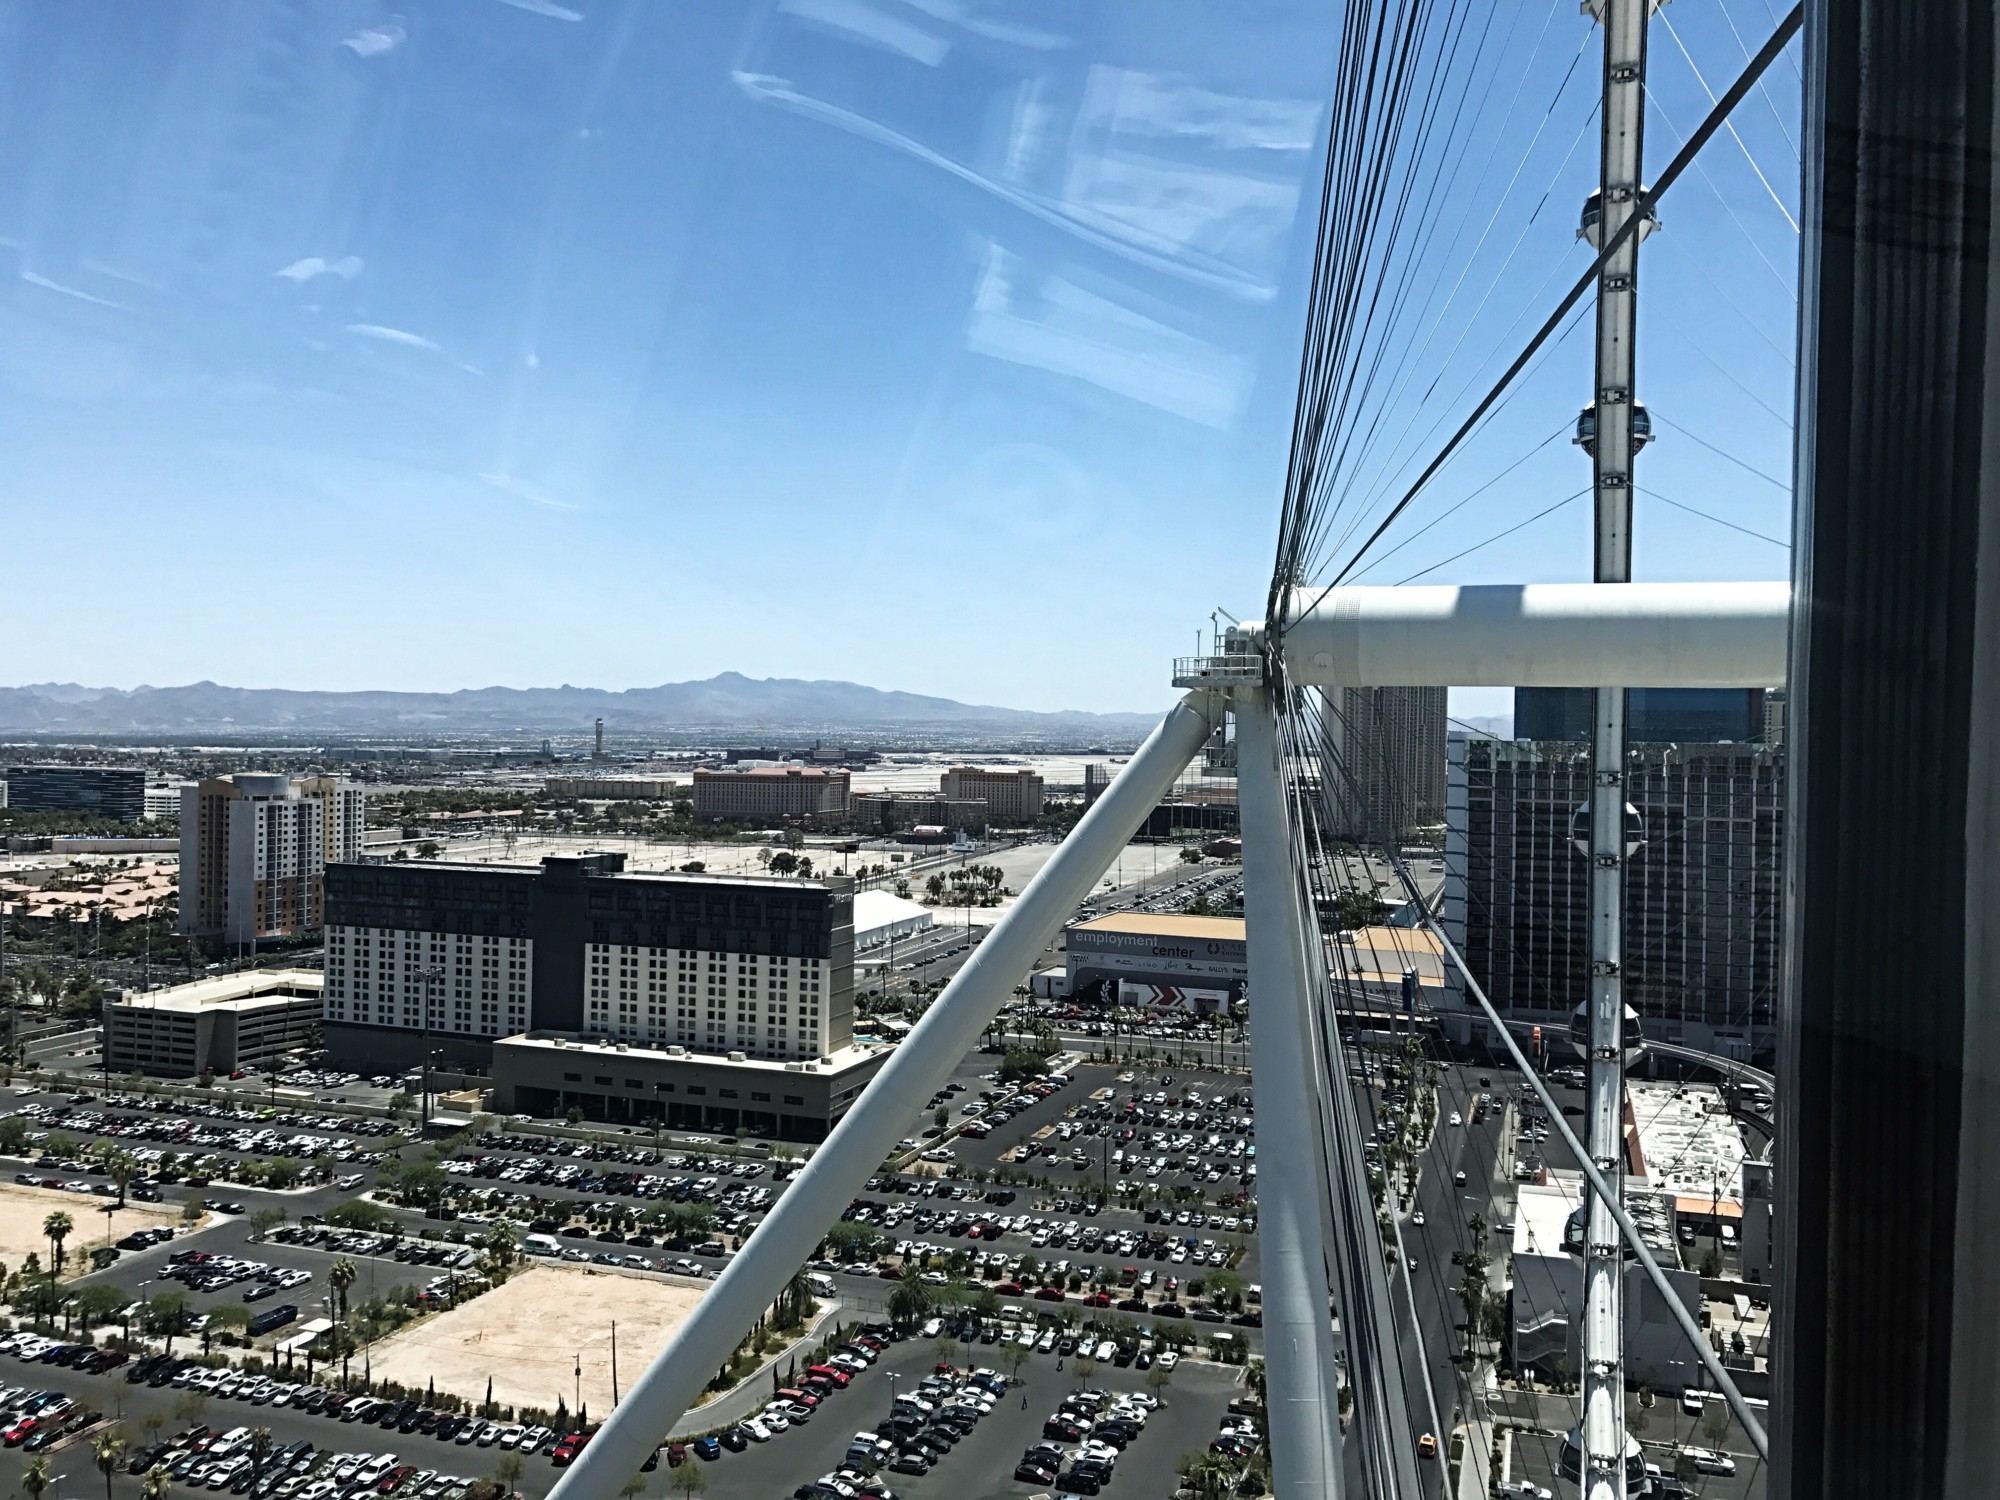 High Roller Observation Wheel in Las Vegas